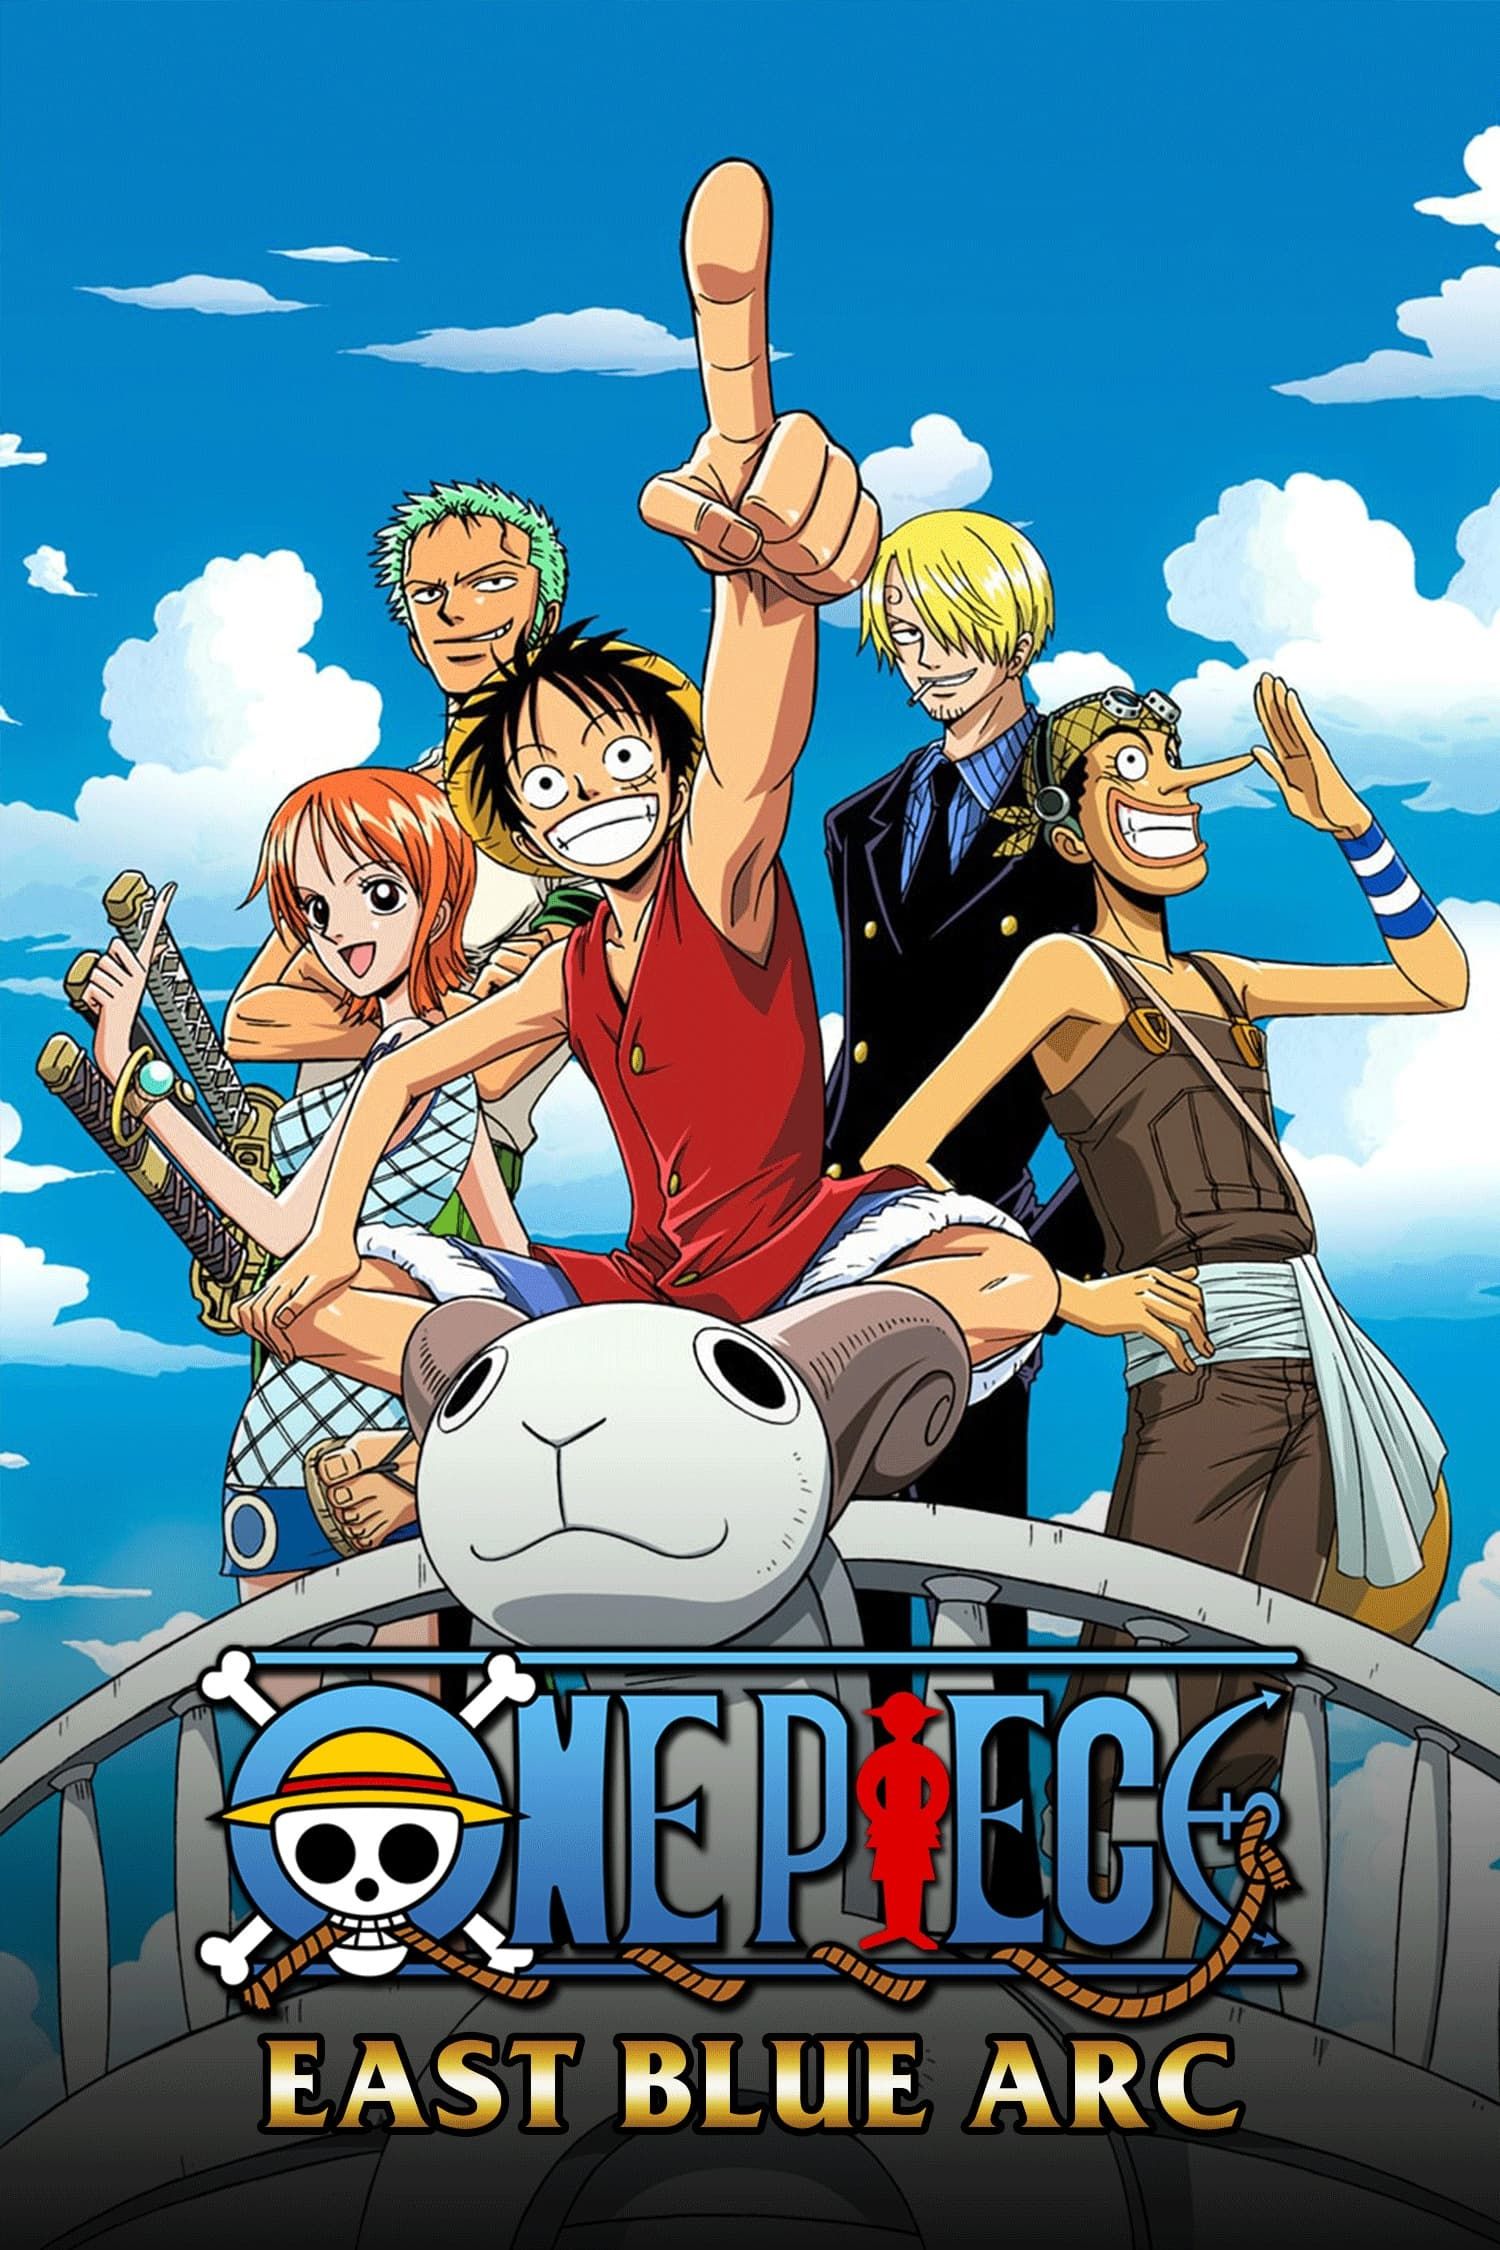 Watch One Piece season 7 episode 20 streaming online